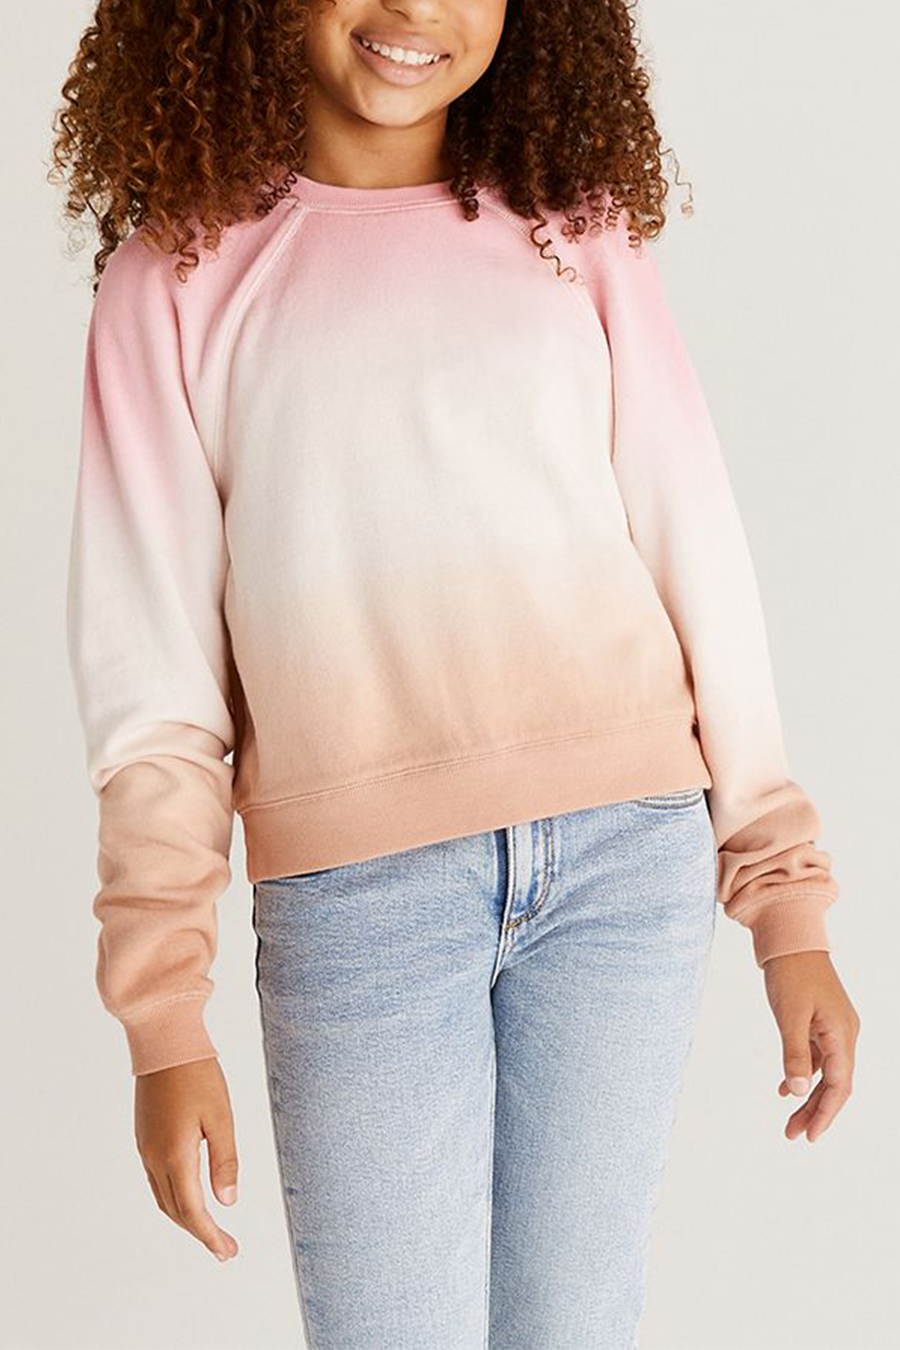 Girls Jonah Sunset Sweatshirt | Flamingo - Main Image Number 1 of 2